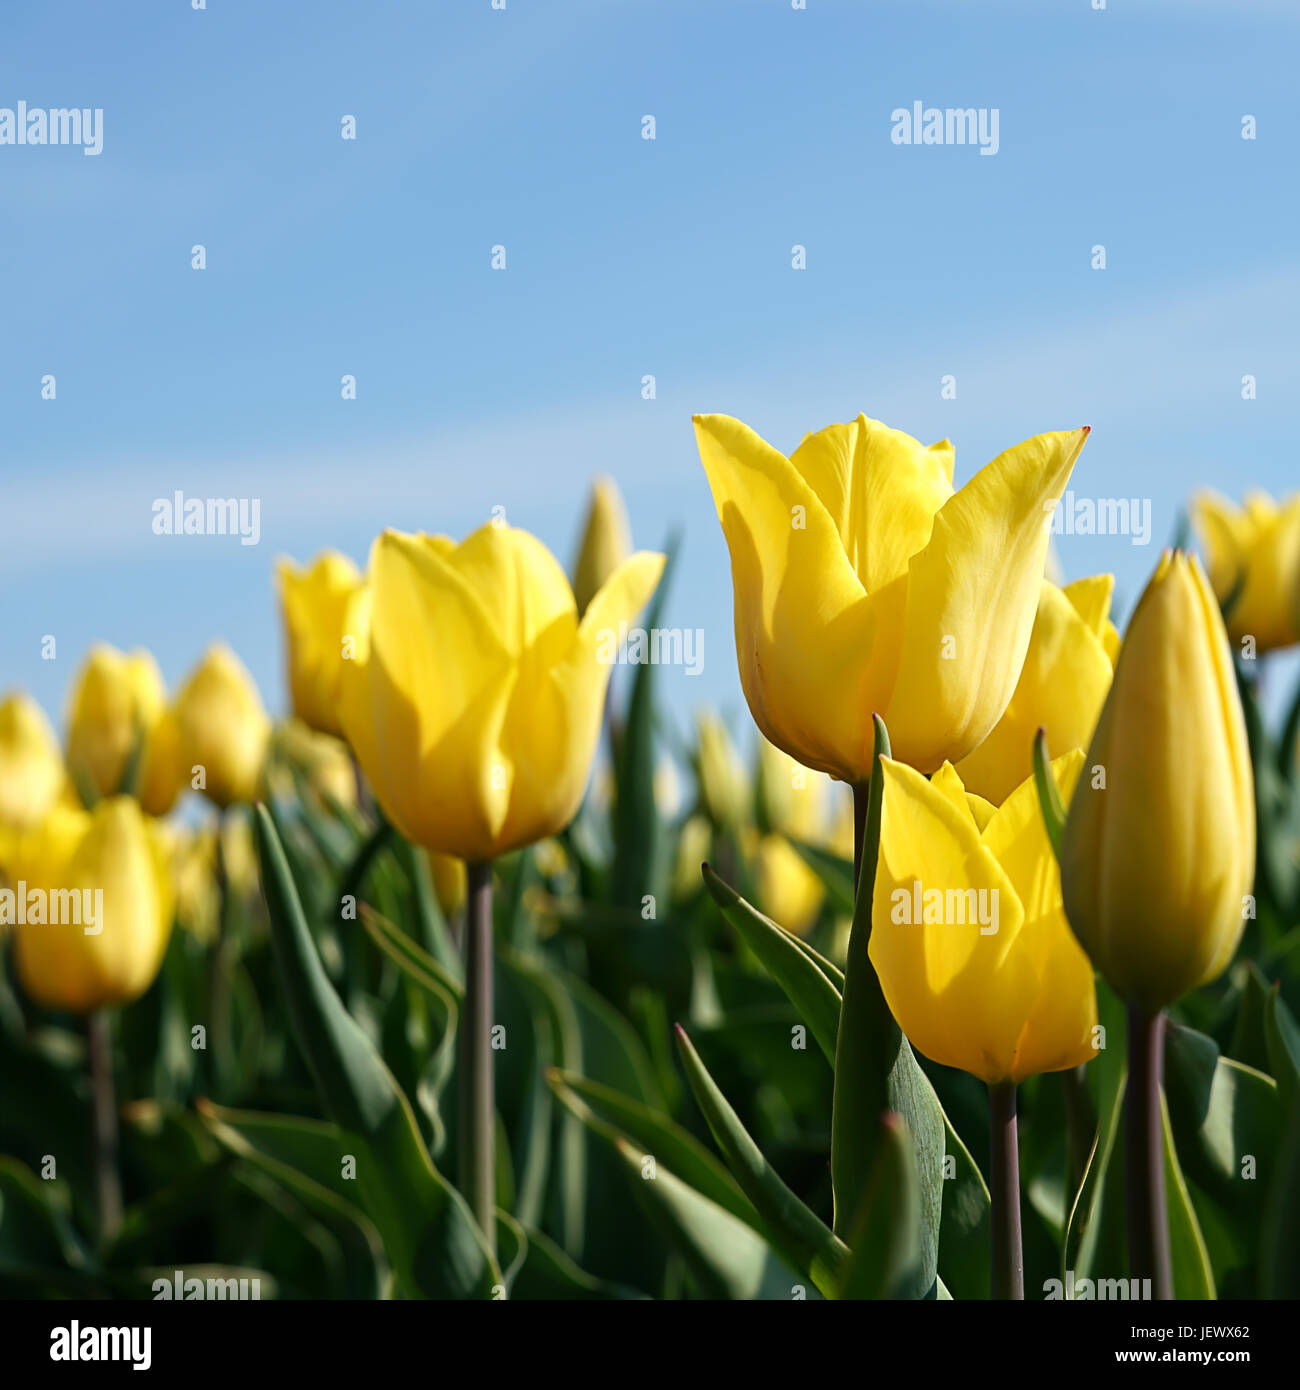 flowering tulips in a field Stock Photo